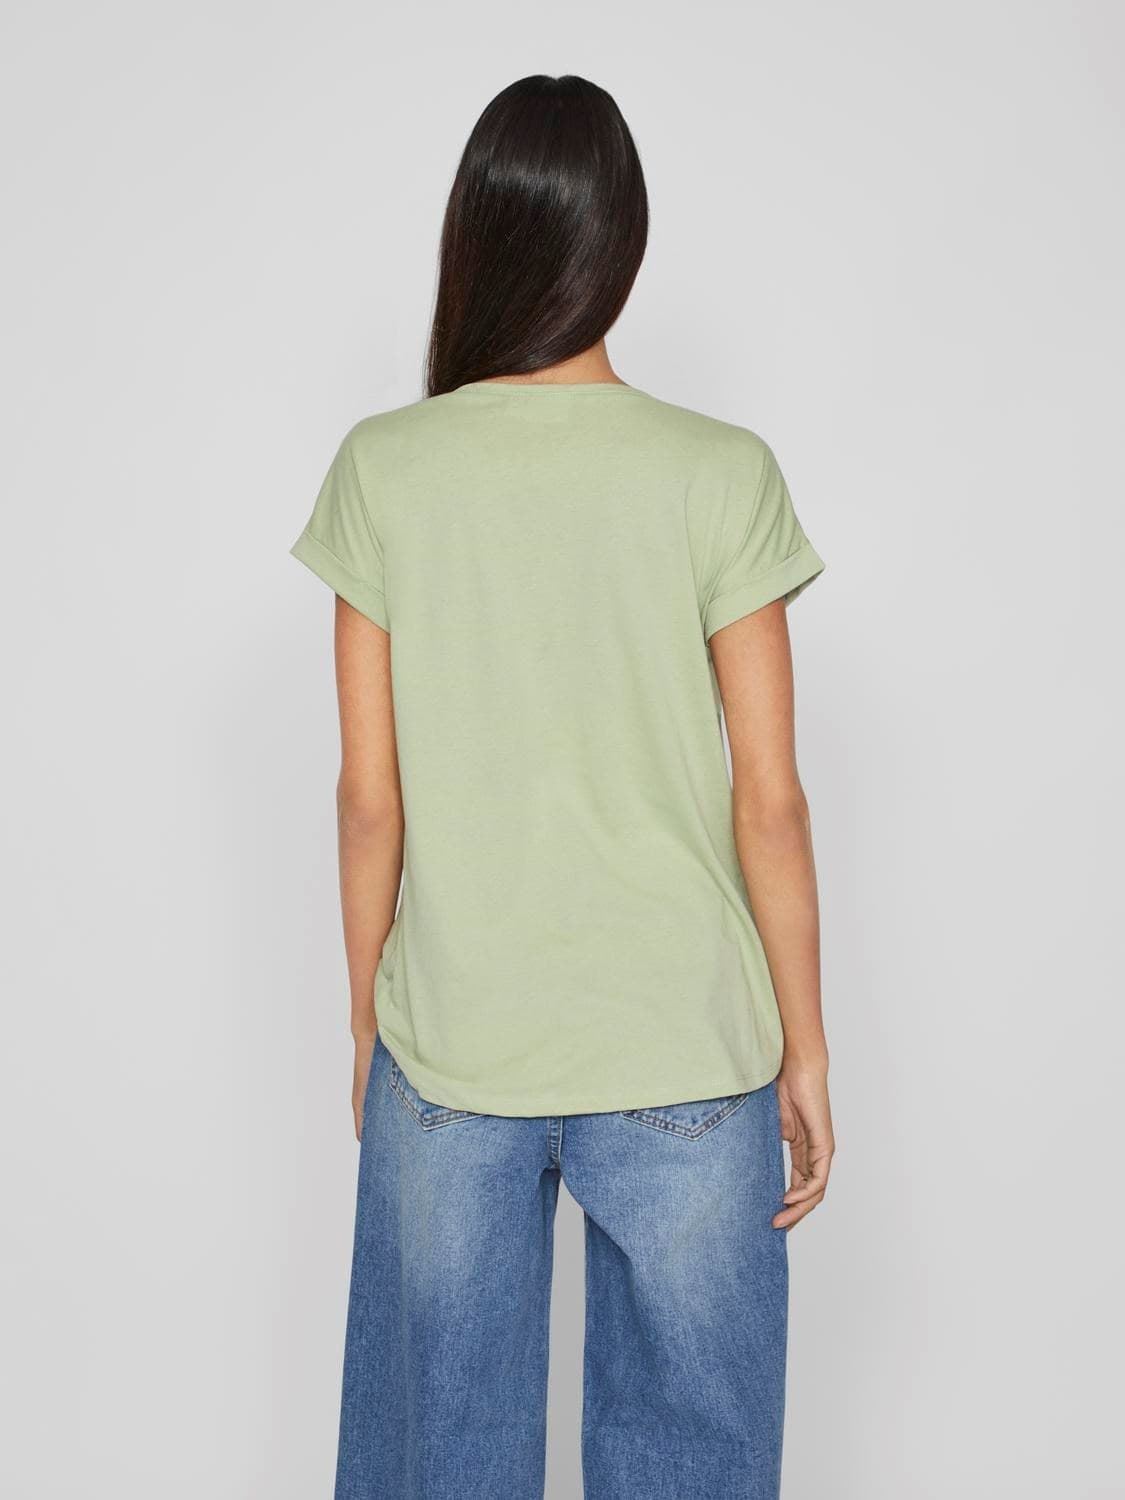 Camiseta verde vidreamers - Imagen 2